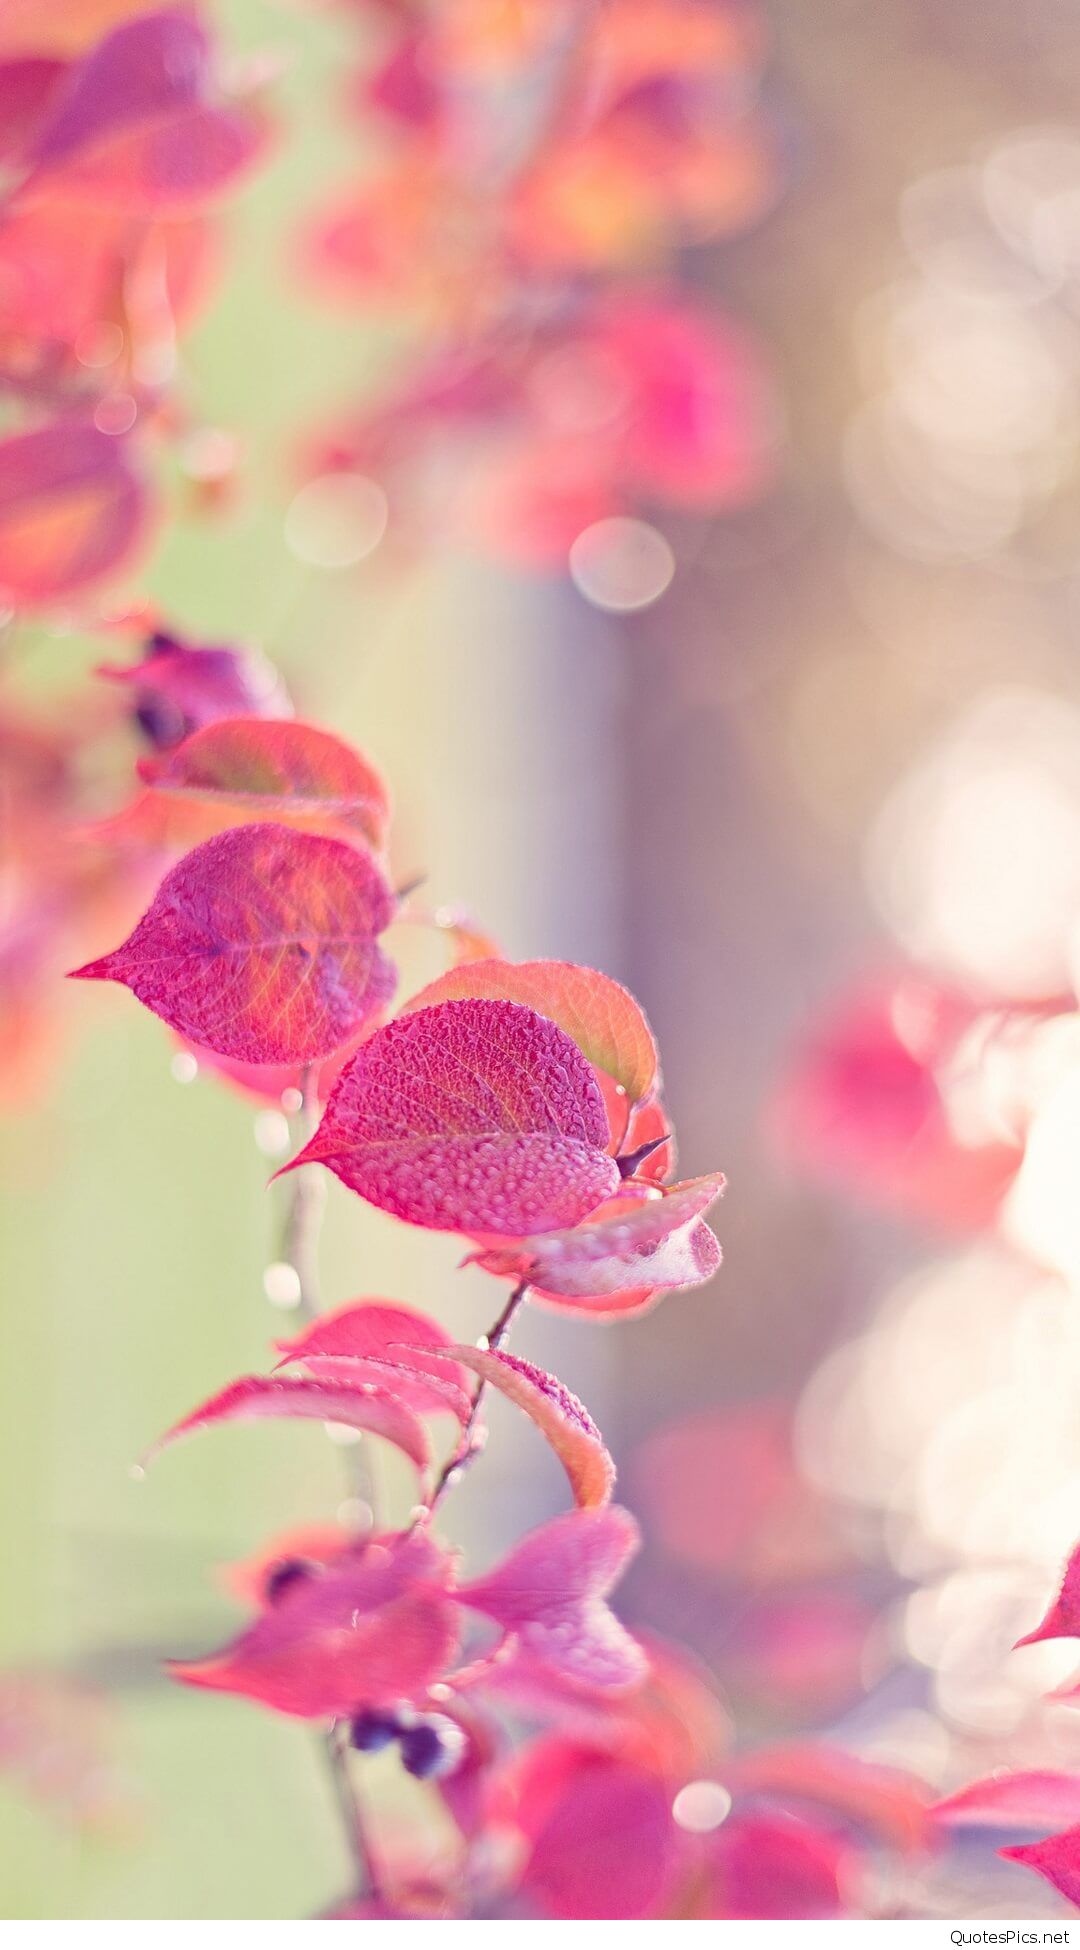 fondos de pantalla femeninos hd,rosado,flor,pétalo,planta,hoja